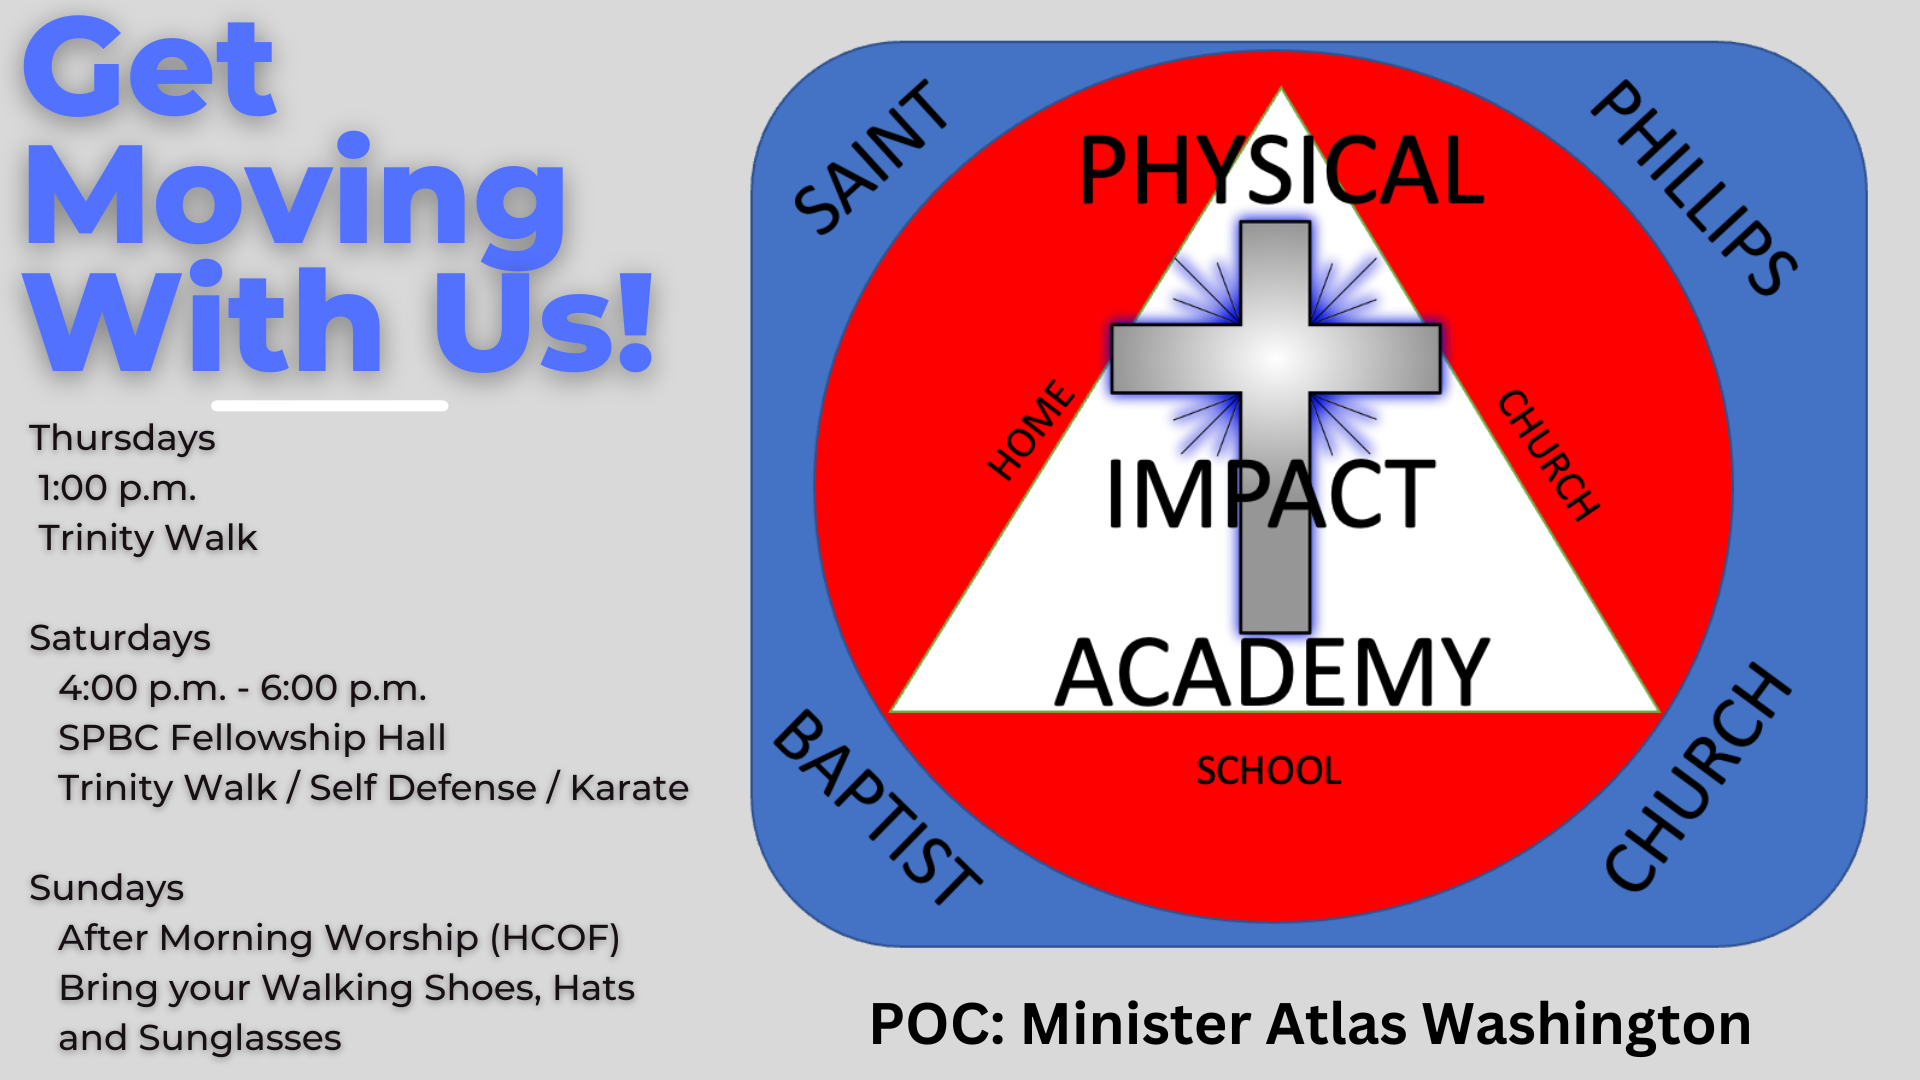 Physical Impact Academy (4)